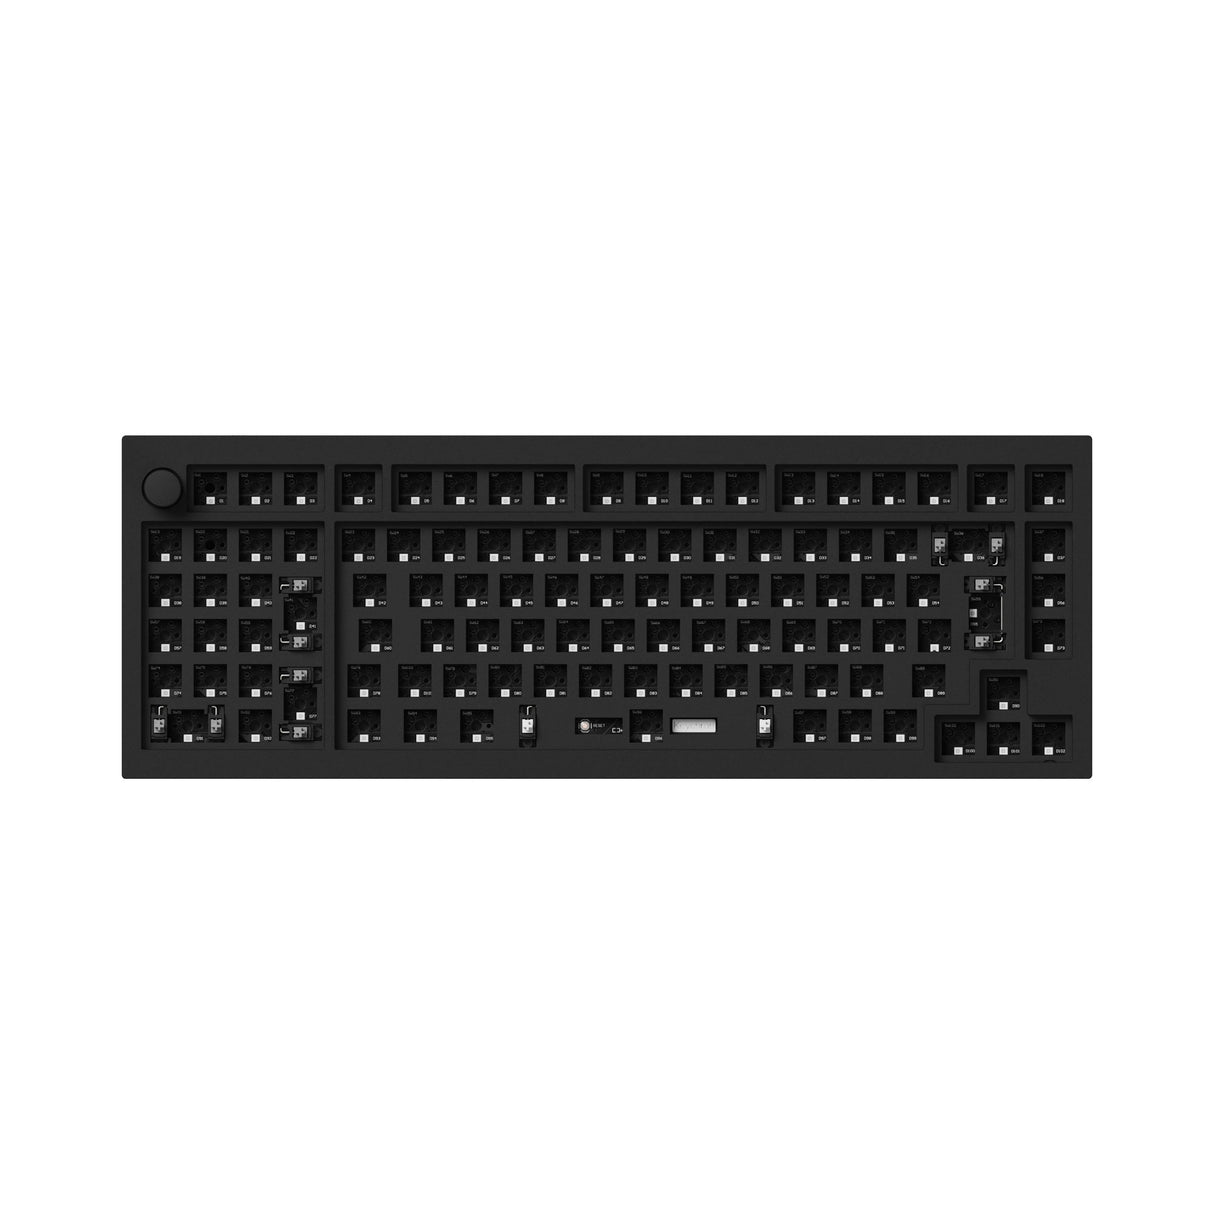 Keychron Q12 QMK VIA southpaw custom mechanical keyboard 96 percent full aluminum frame for Mac Window Linux barebone ISO black